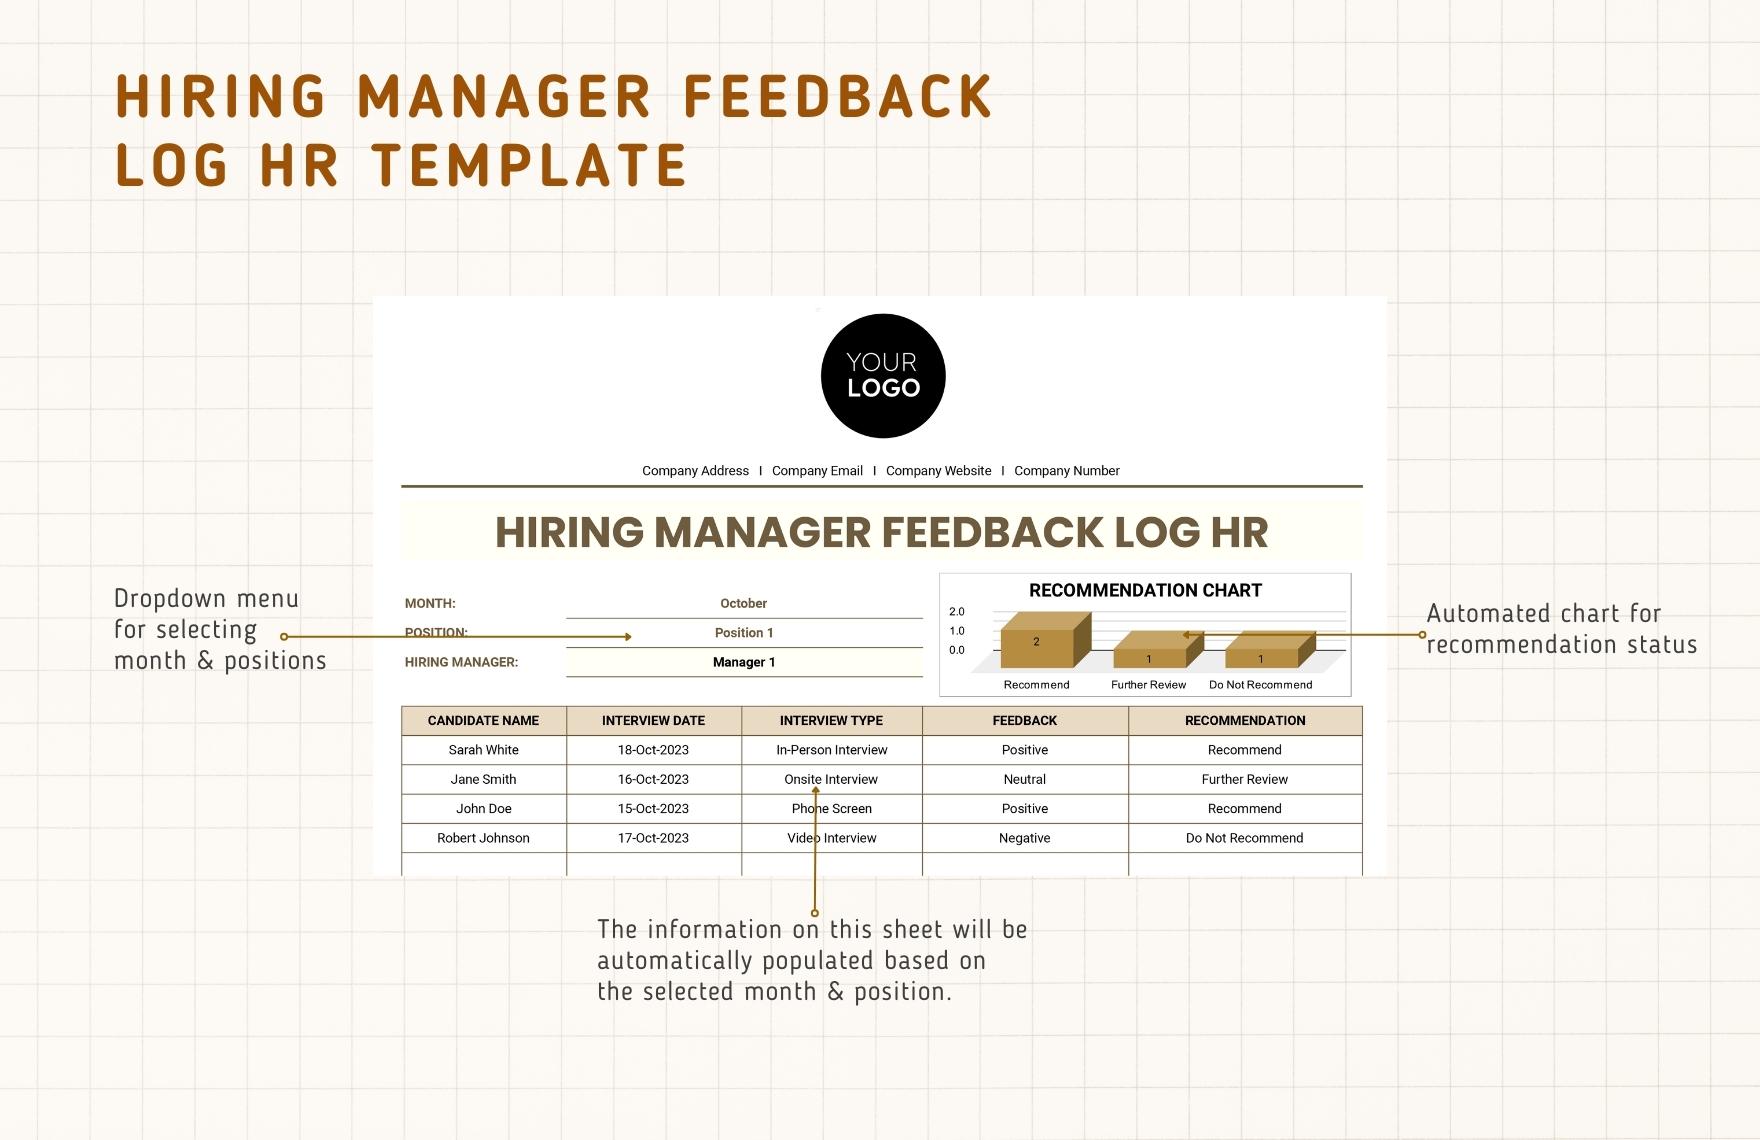 Hiring Manager Feedback Log HR Template